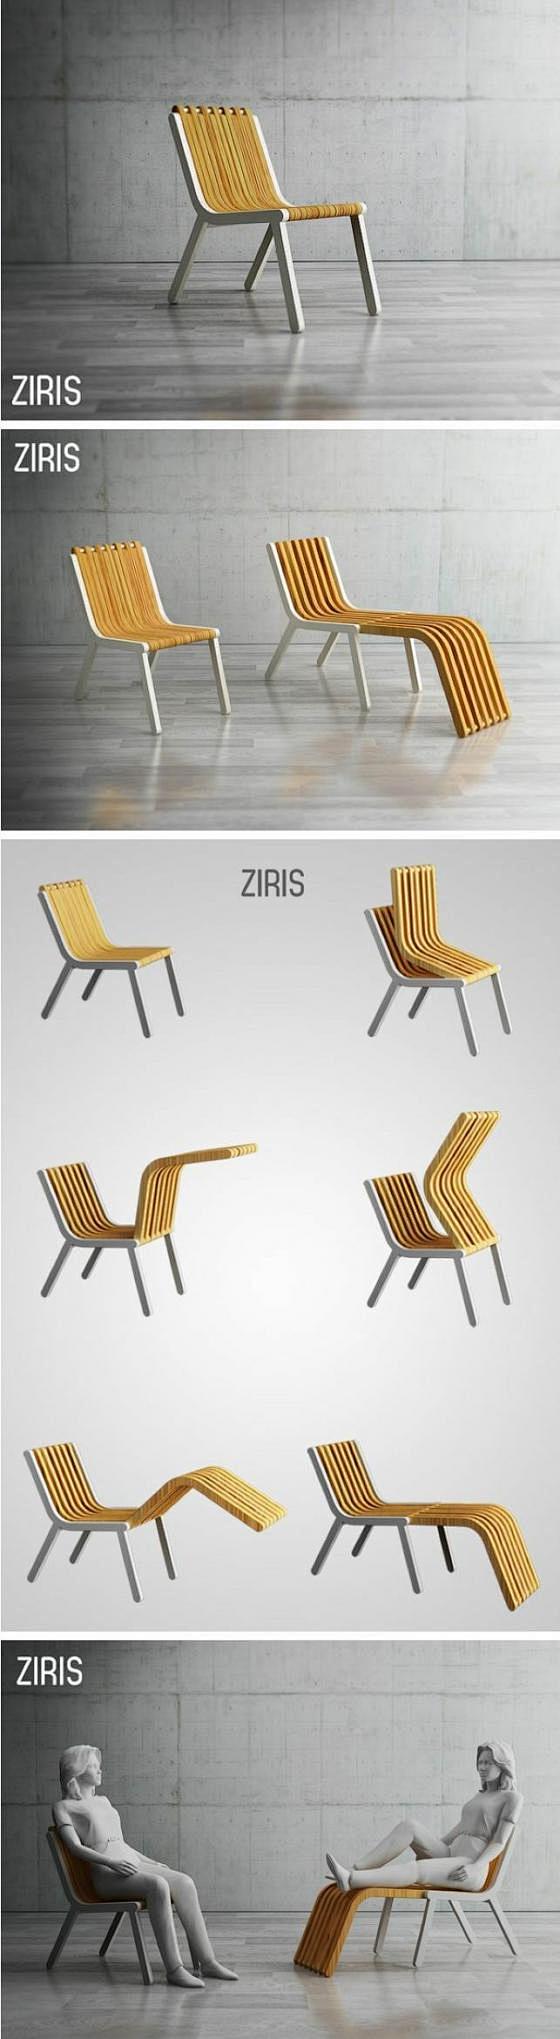 Ziris折叠木椅